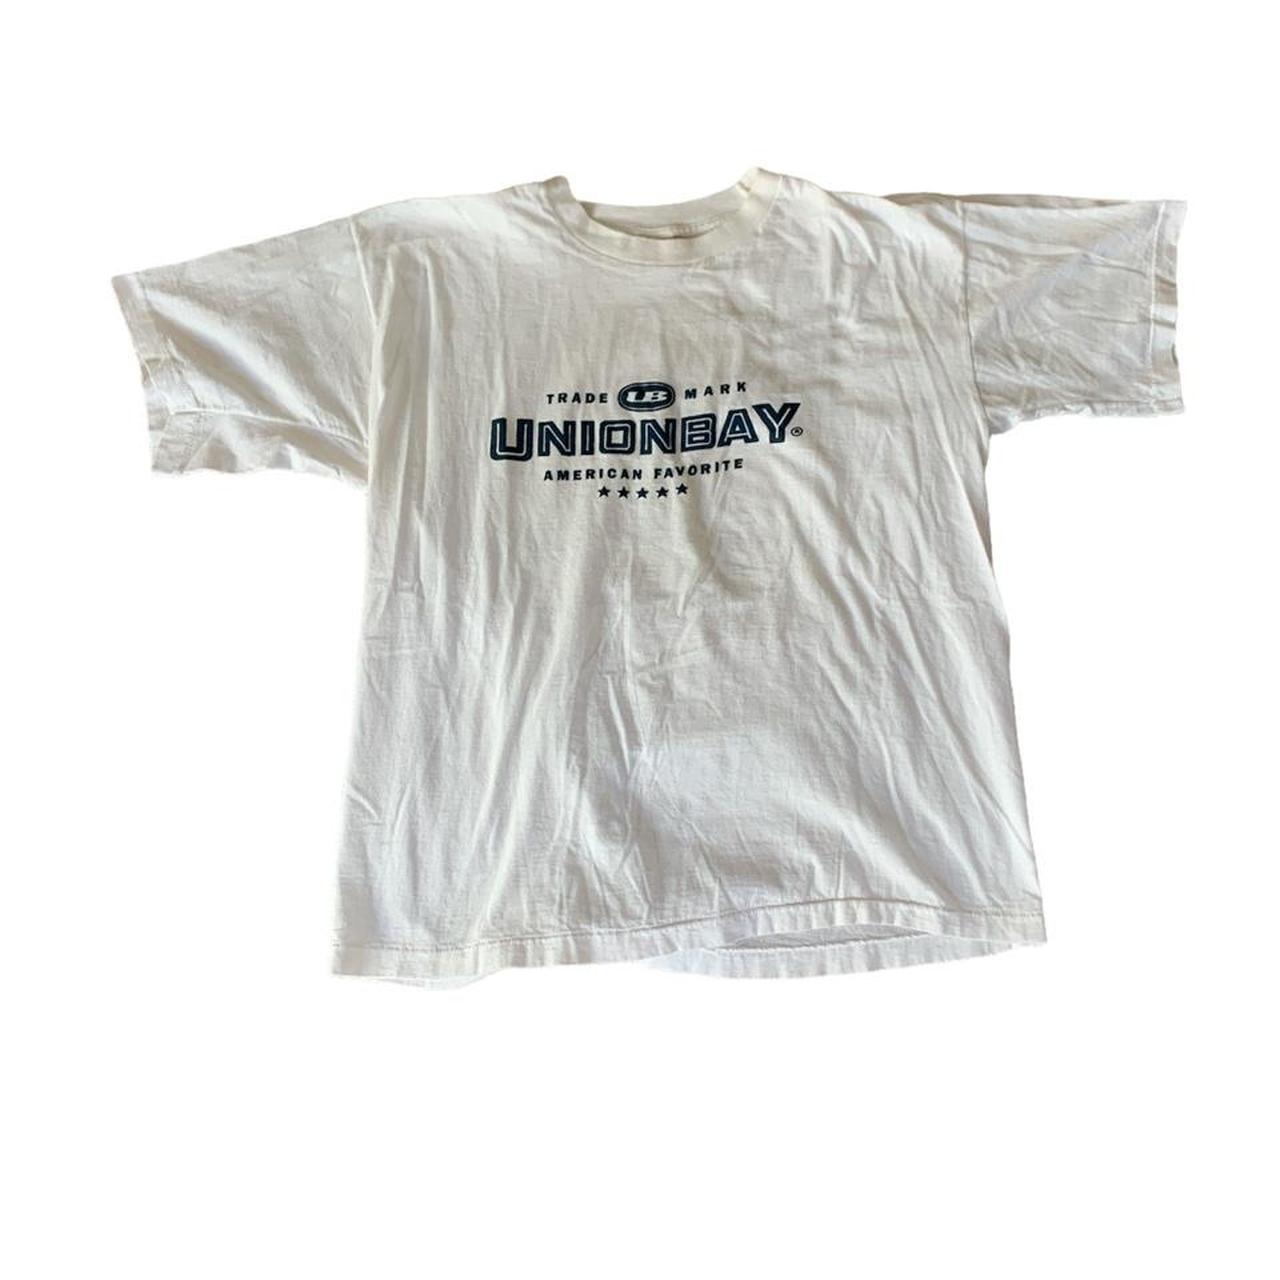 Union Bay Men's White and Navy T-shirt